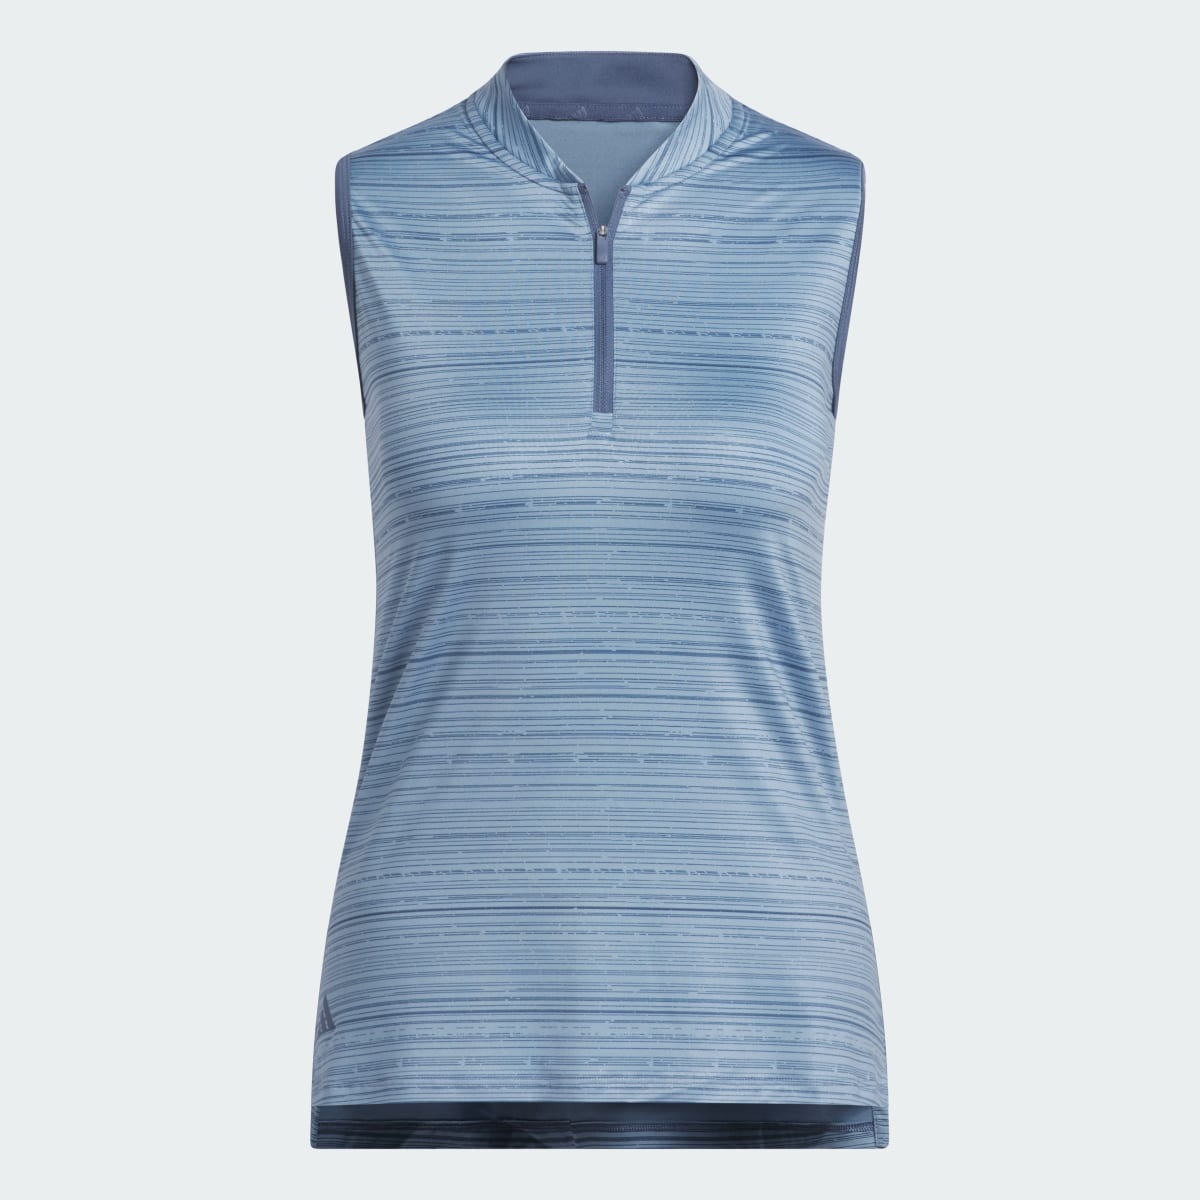 Adidas Women's Ultimate365 Stripe Sleeveless Polo Shirt. 5